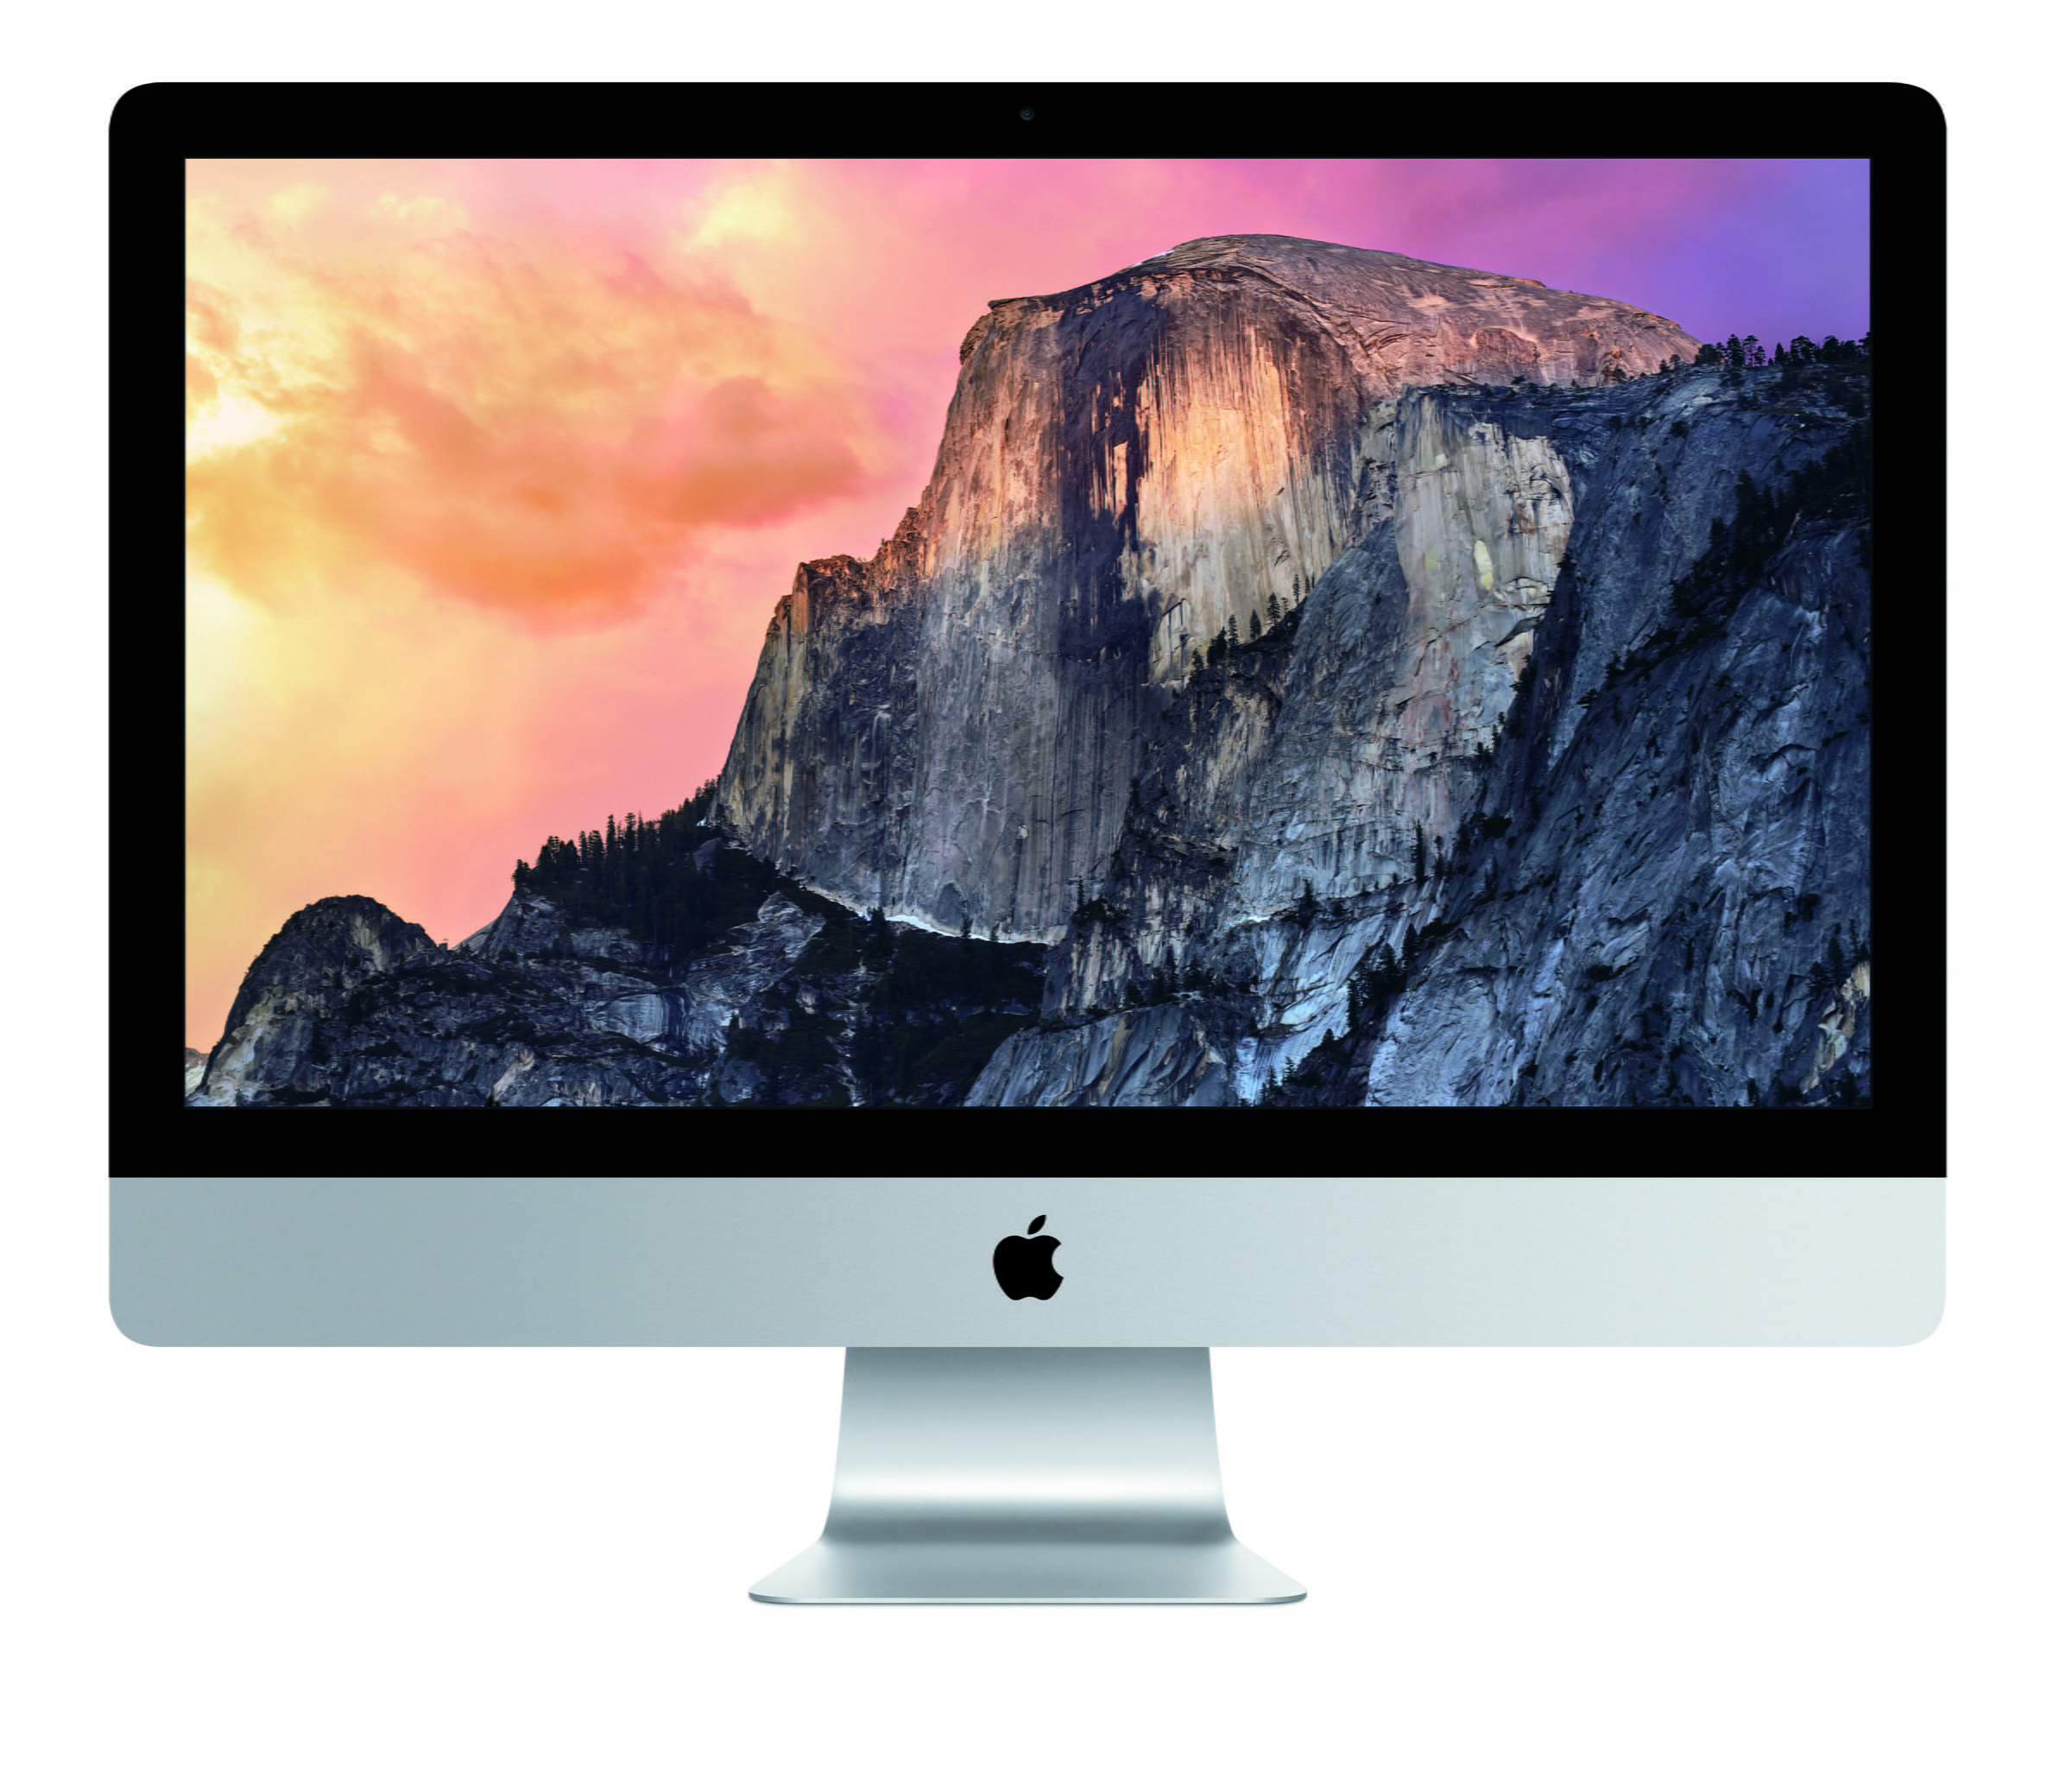 iTunes 12.8.1 Update killt Safari auf OS X 10.10 Yosemite